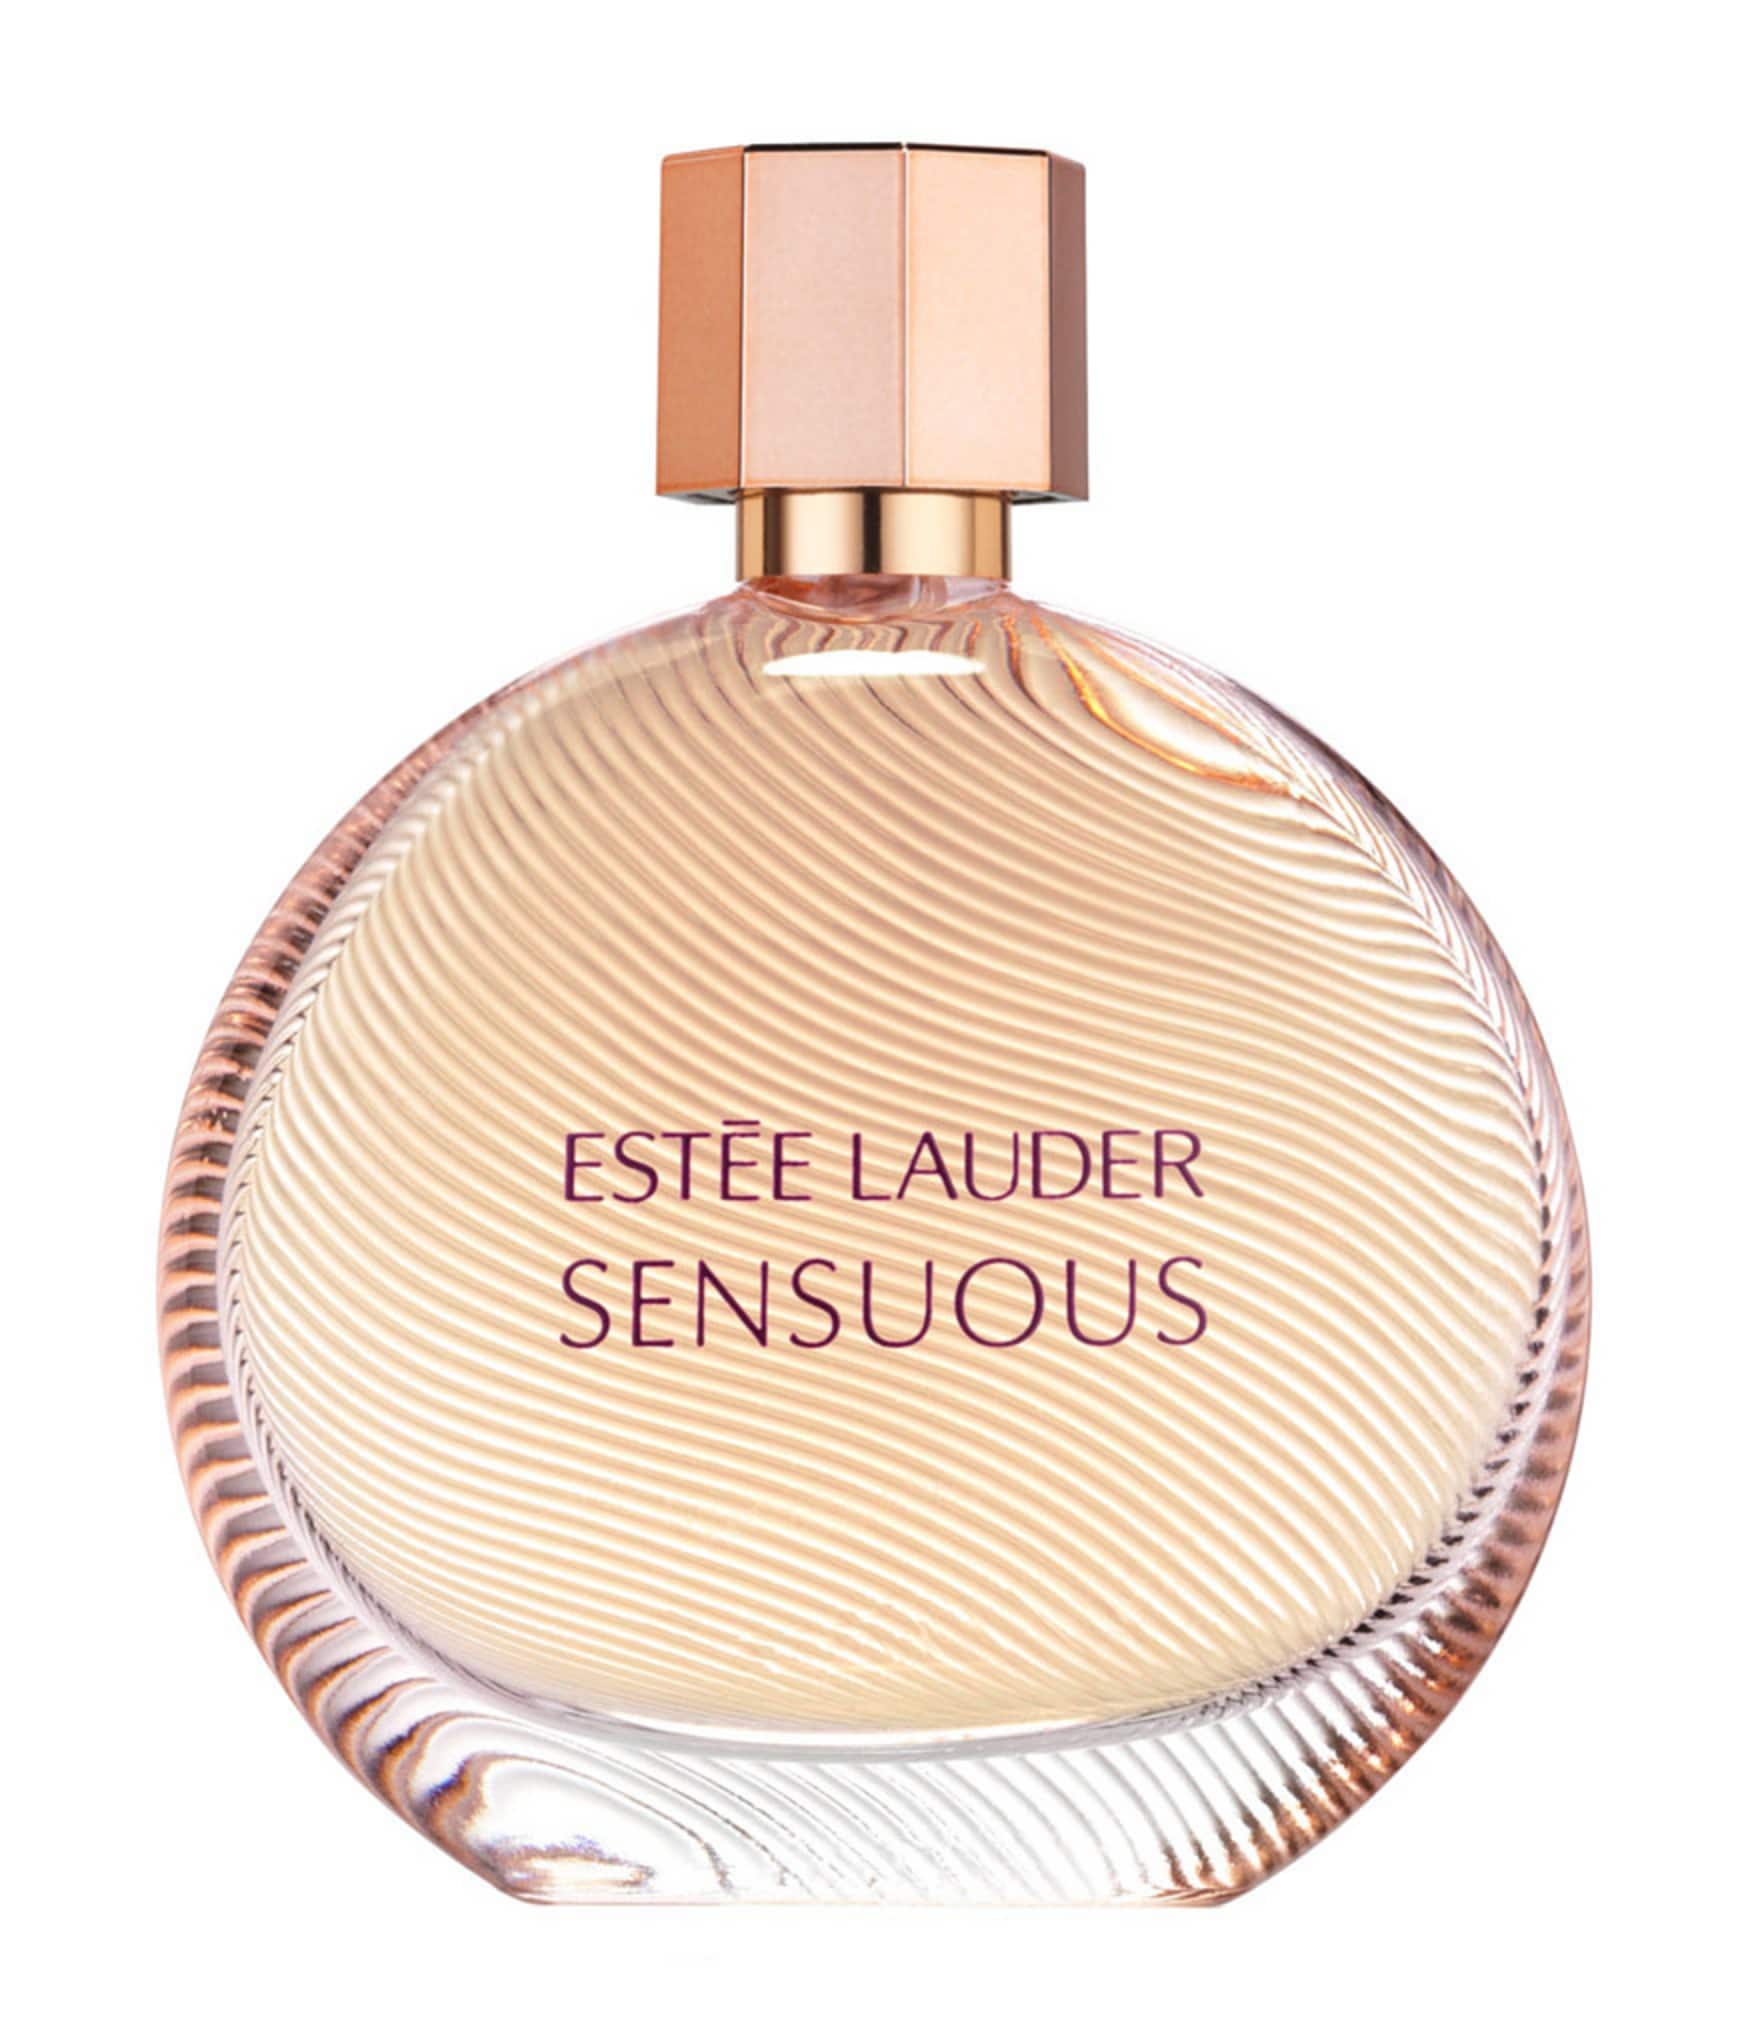 Estee Lauder Sensuous Eau de Parfum Spray Dillard's